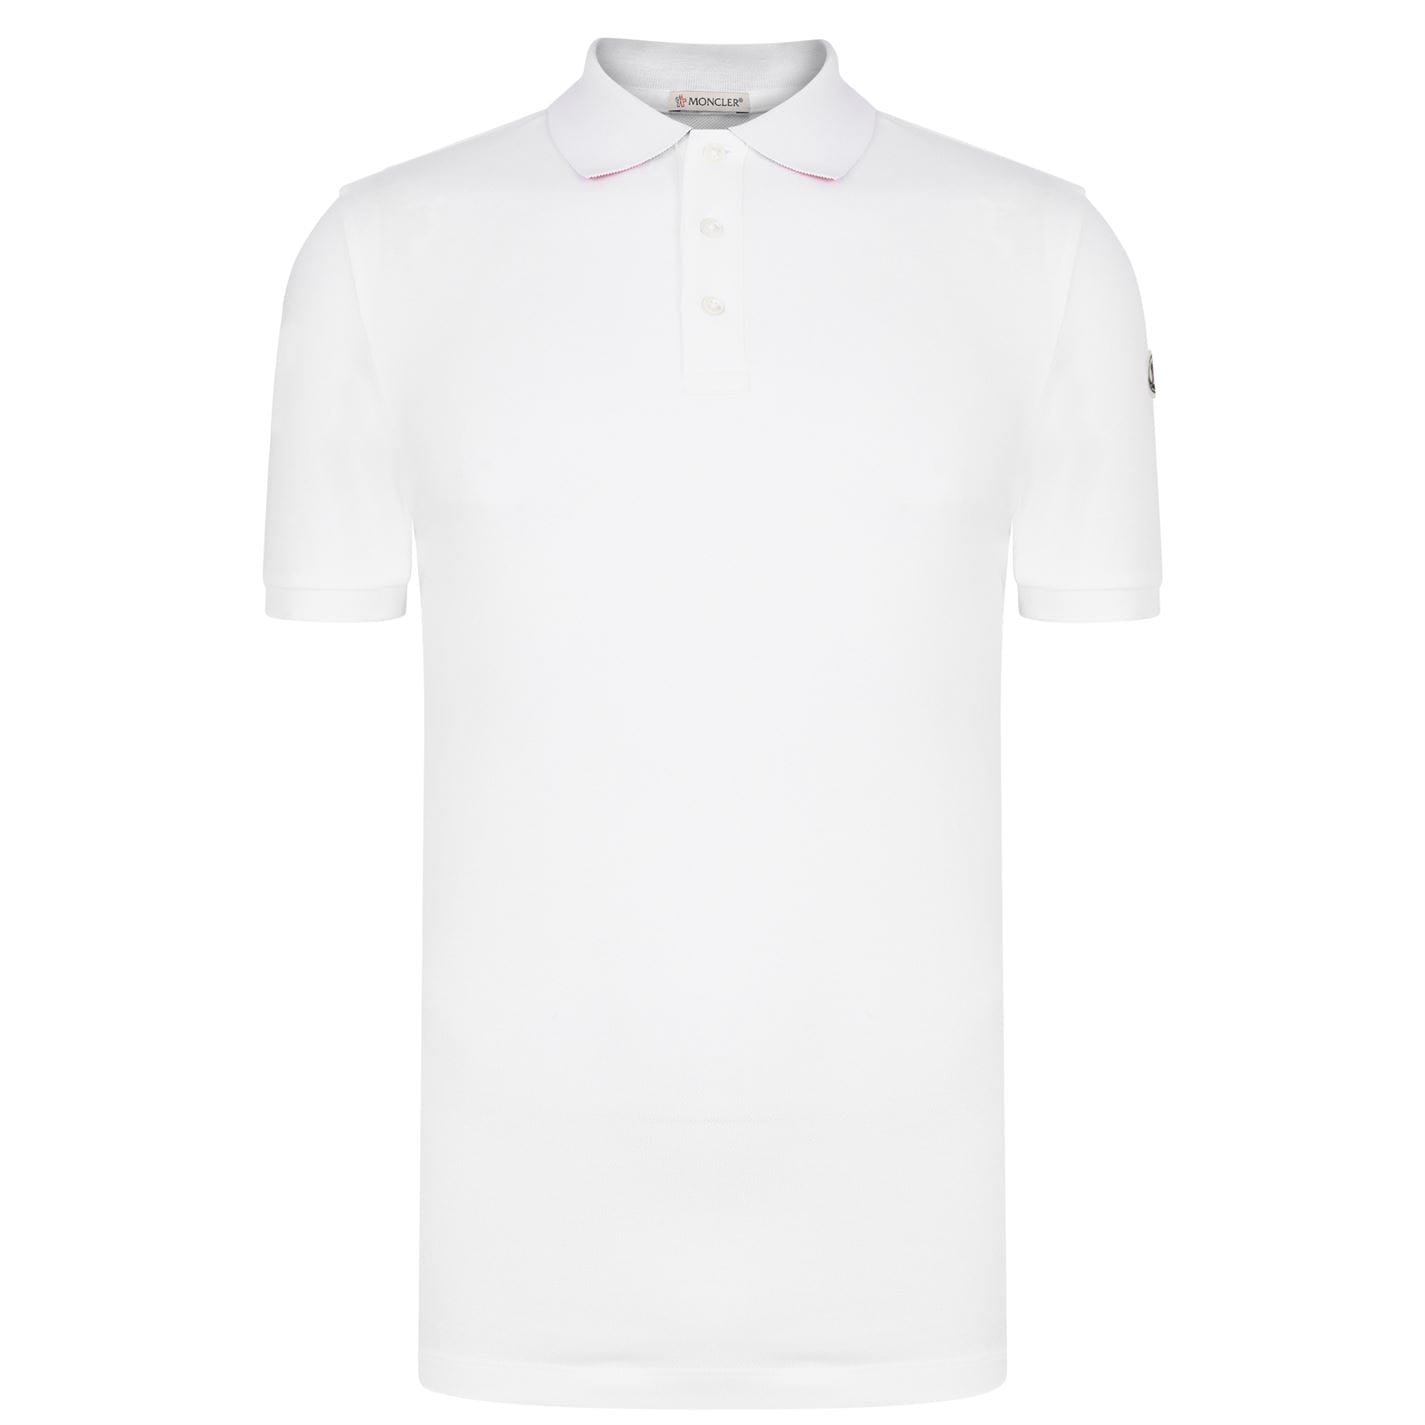 Anoniem logica Lenen Moncler Logo Polo Shirt Navy – goedkope moncler jassen van hoge kwaliteit